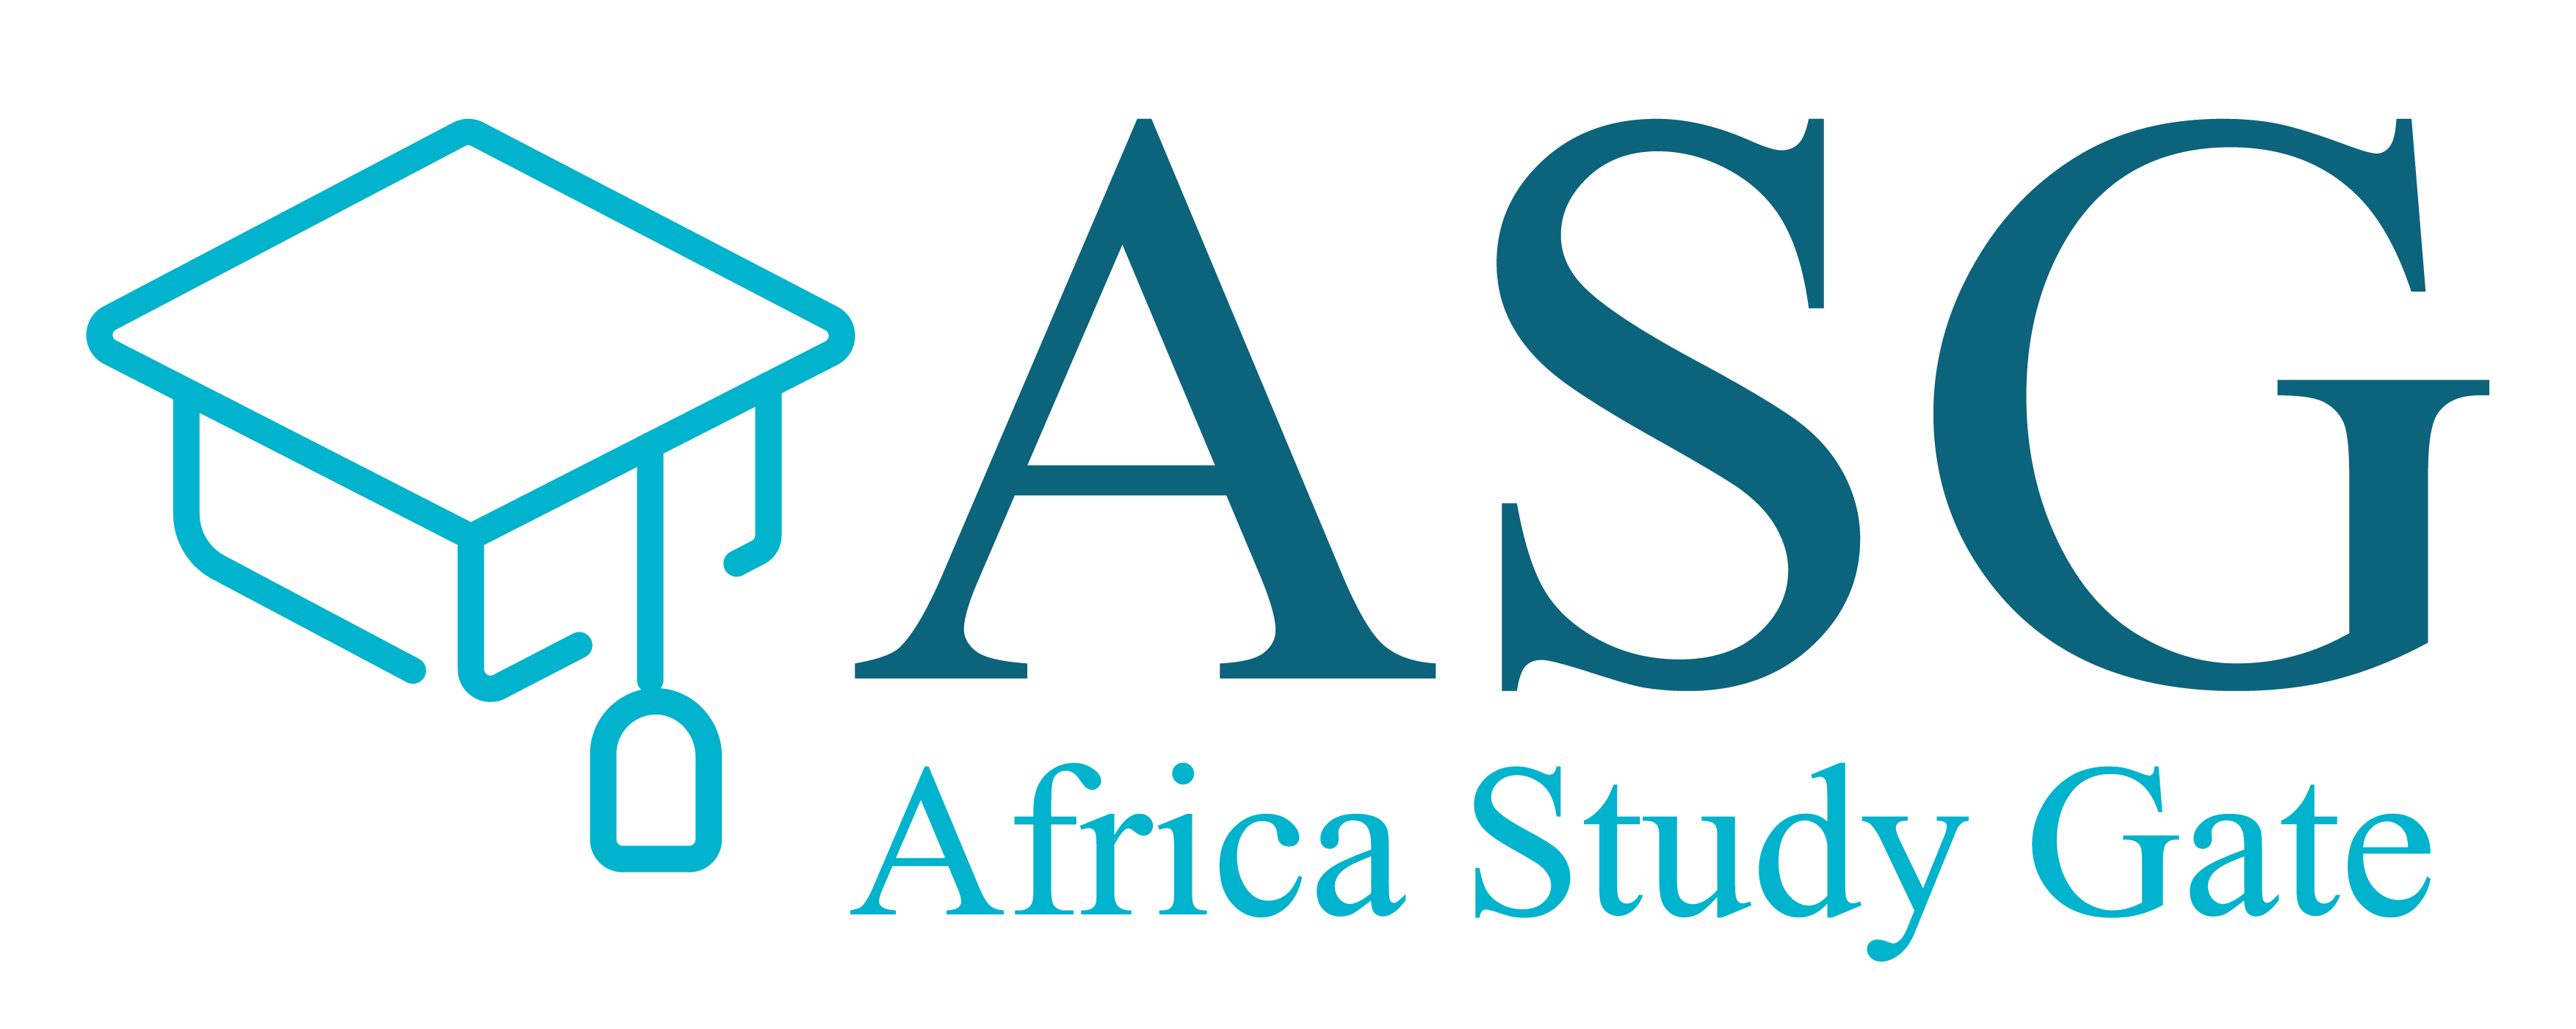 Africa Study Gate